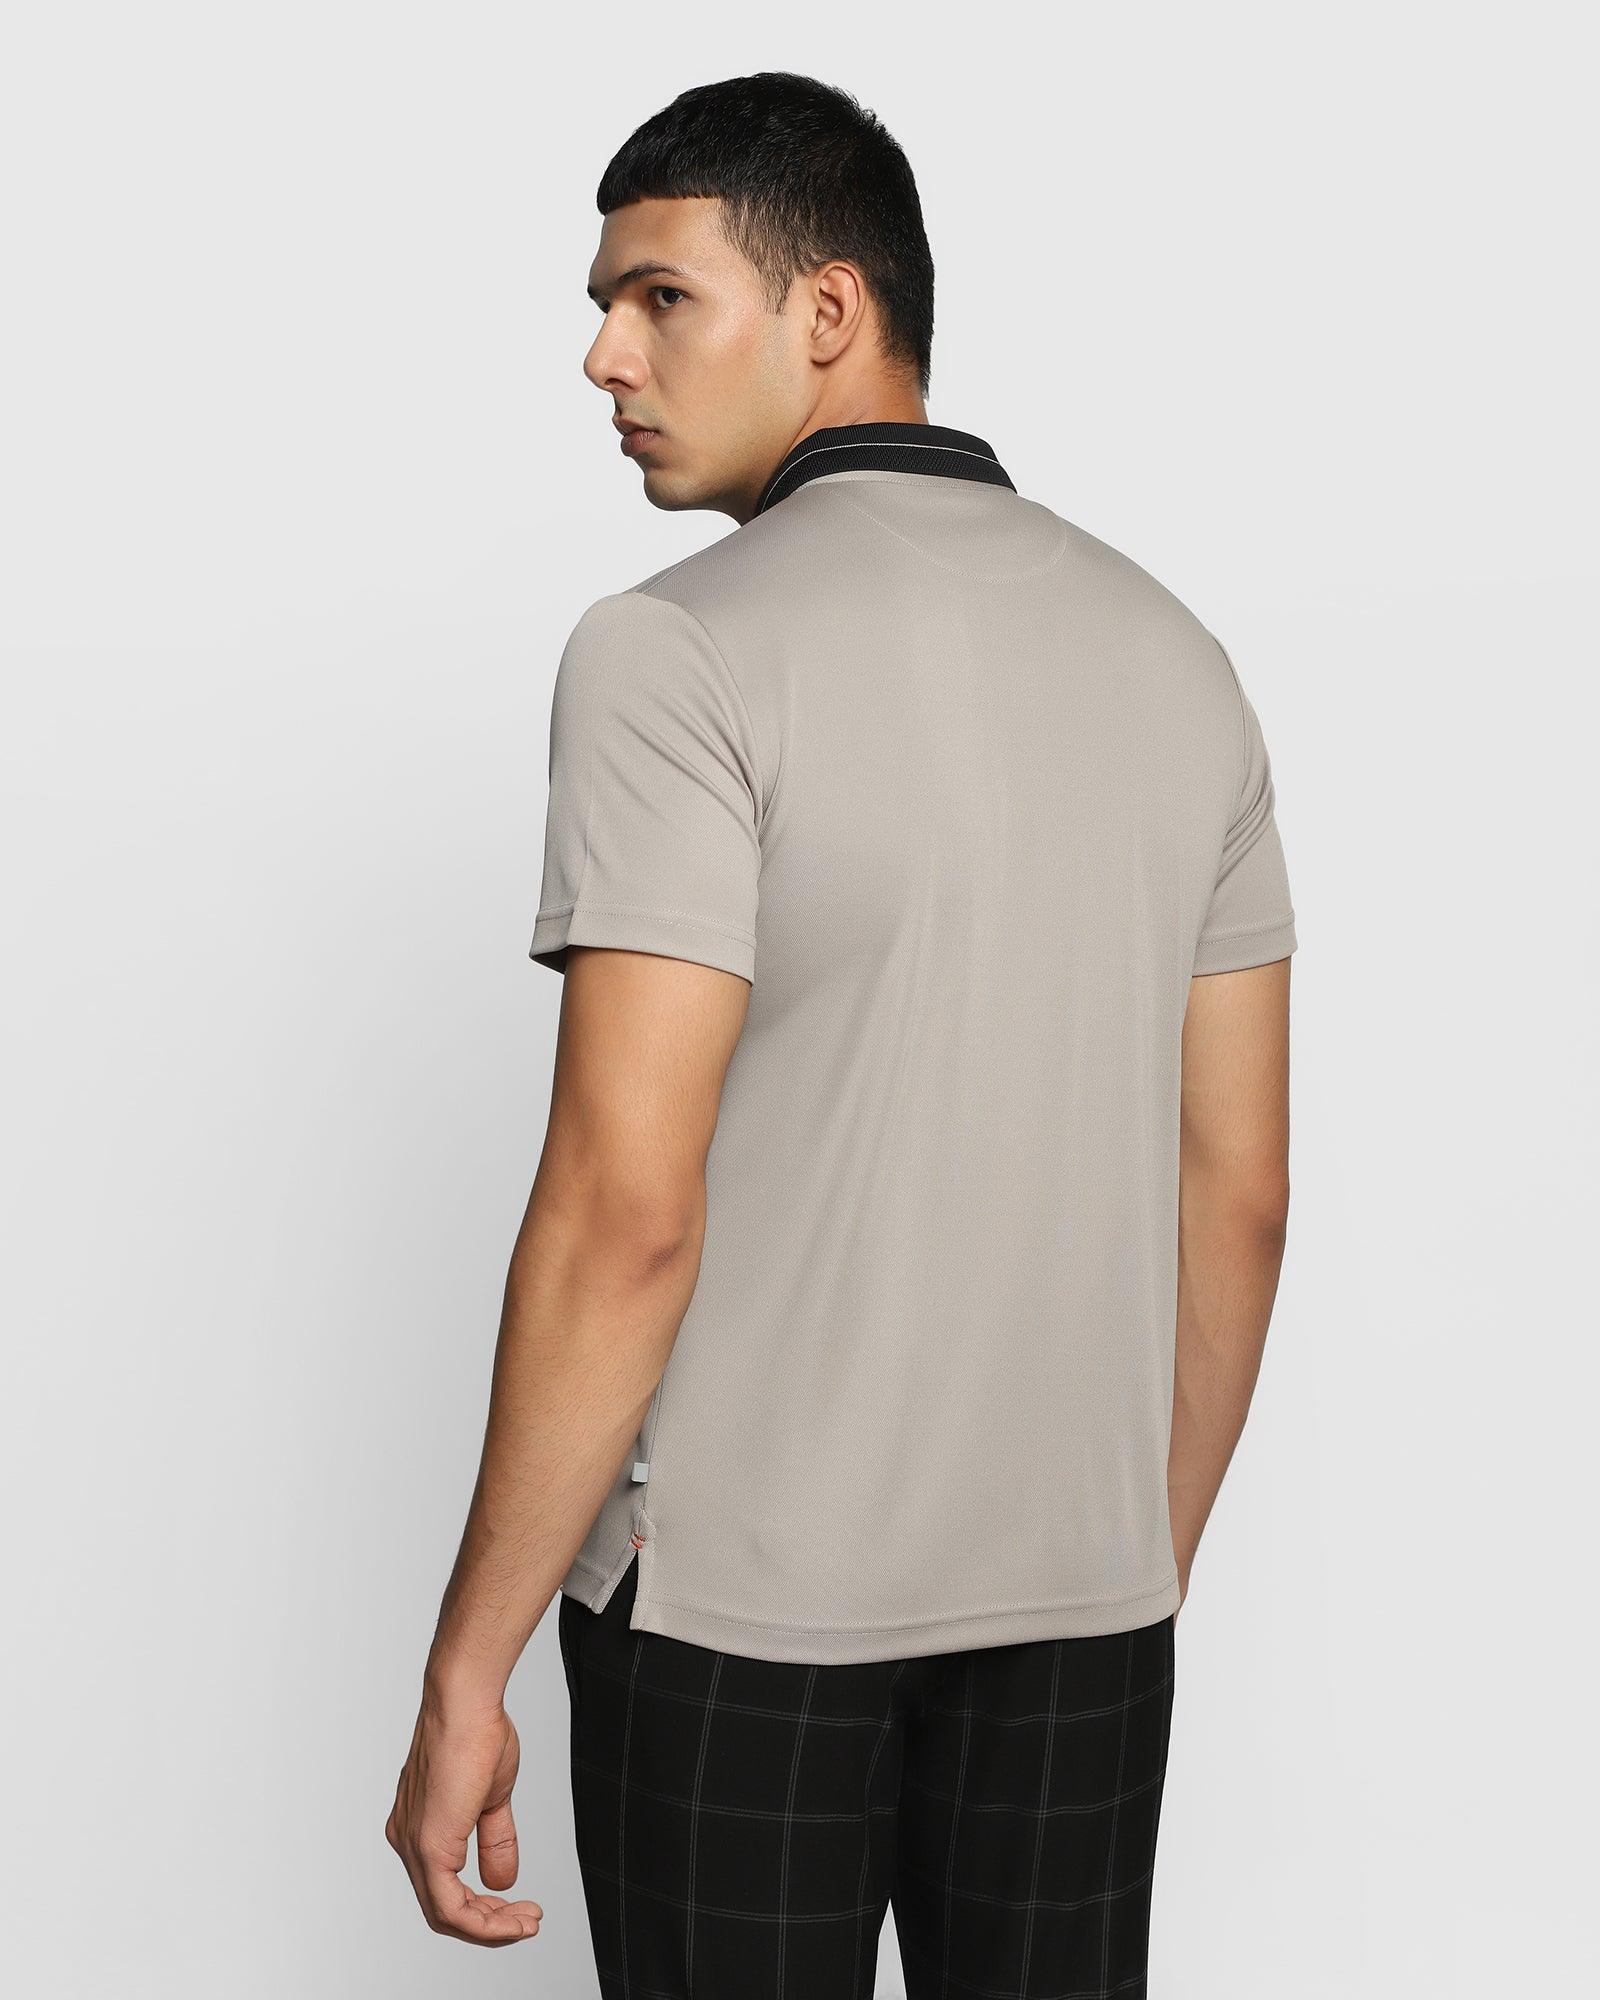 TechPro Polo Ash Grey Solid T-Shirt - Susan